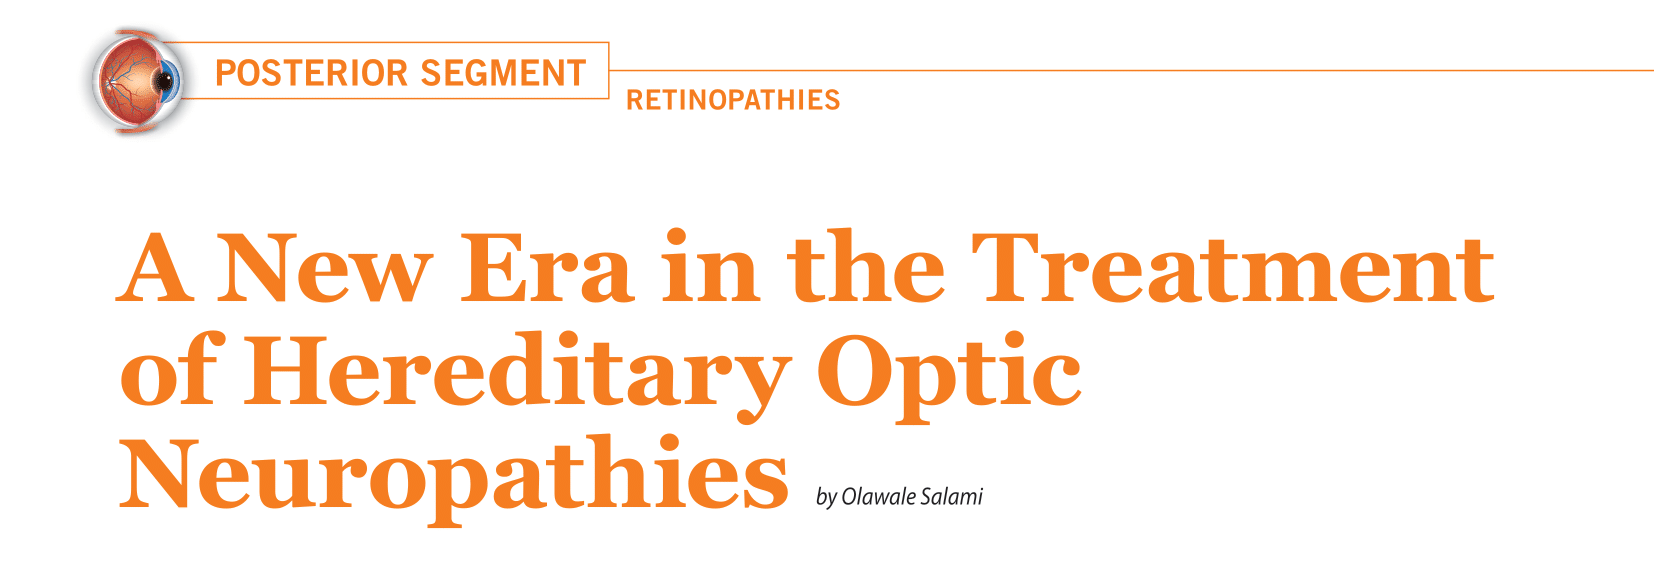 A New Era in the Treatment of Hereditary Optic Neuropathies